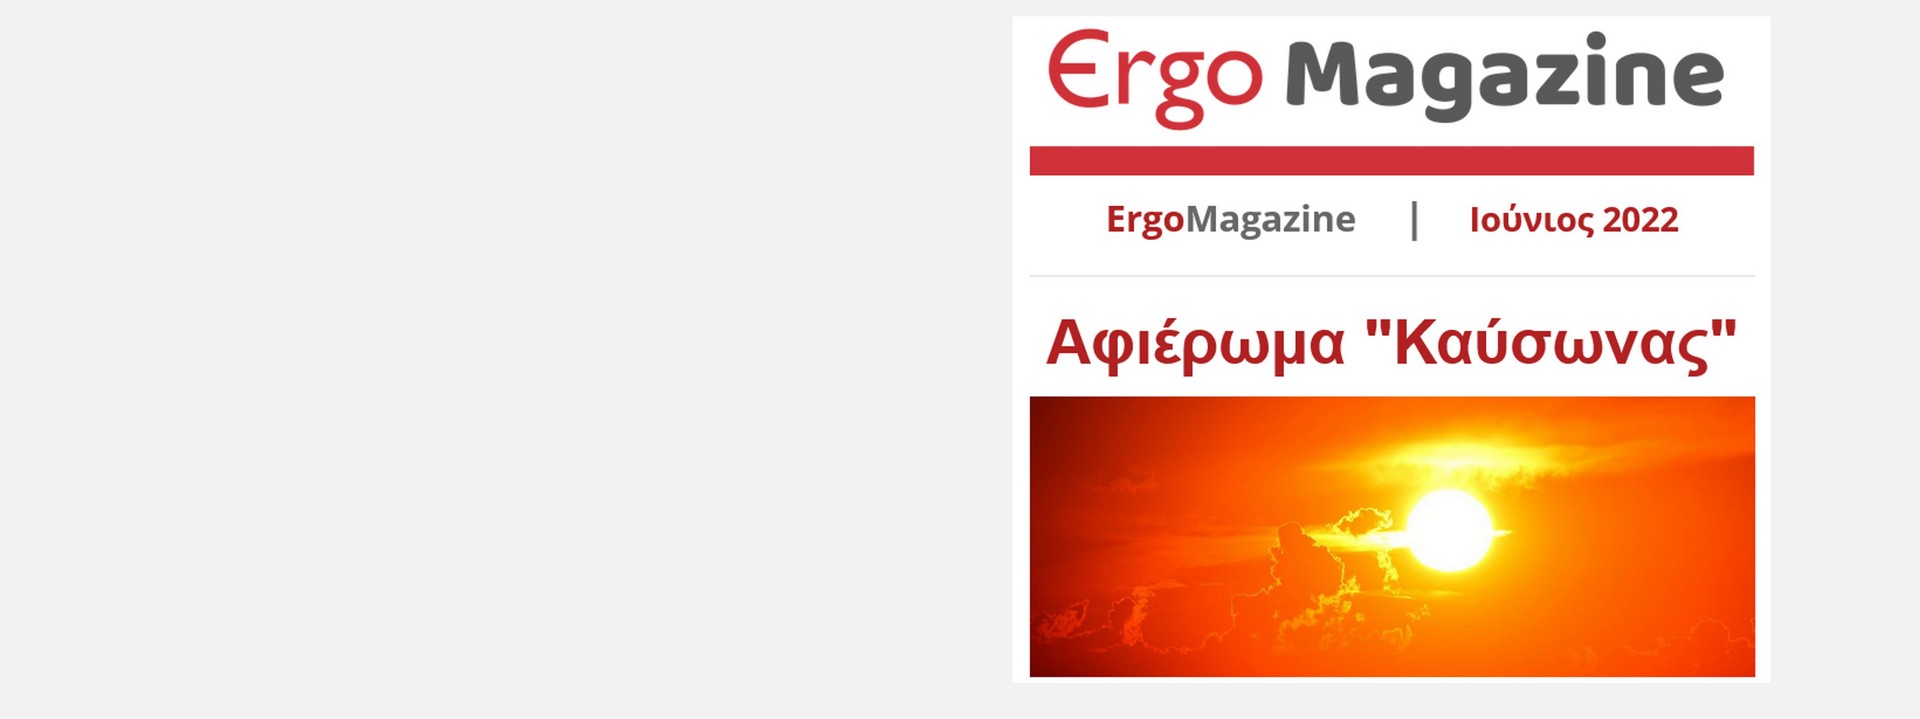 ErgoMagazine June 22